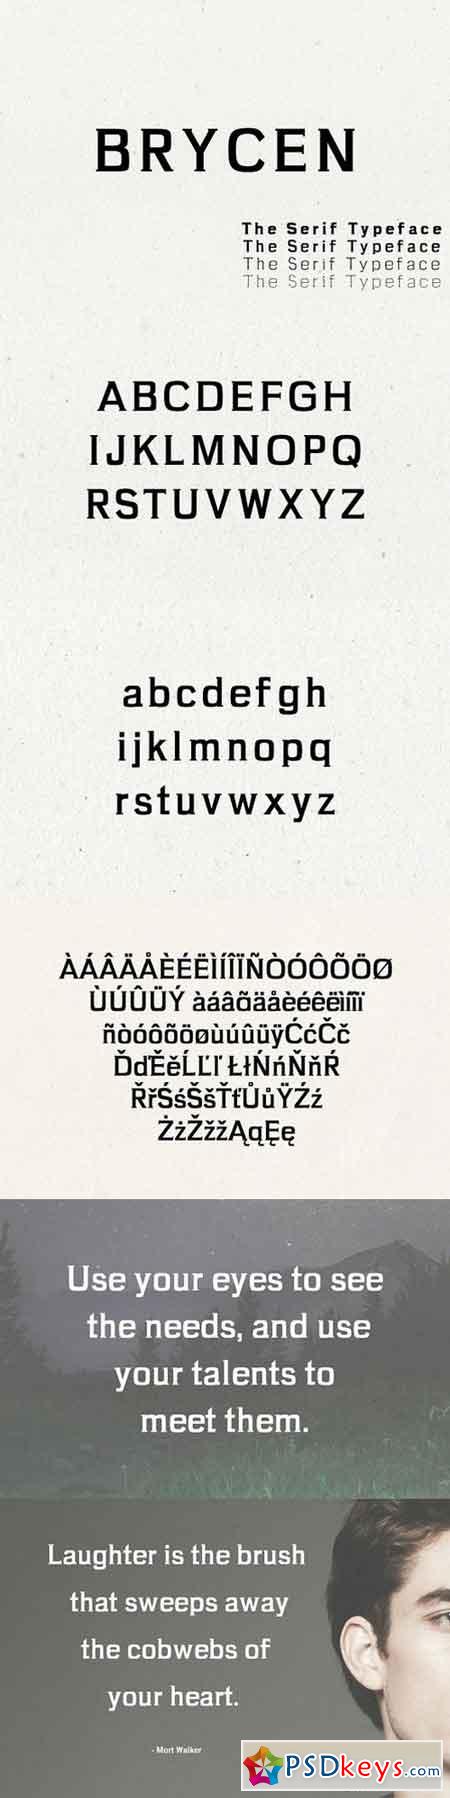 Brycen Serif Premium Font Family 1728045